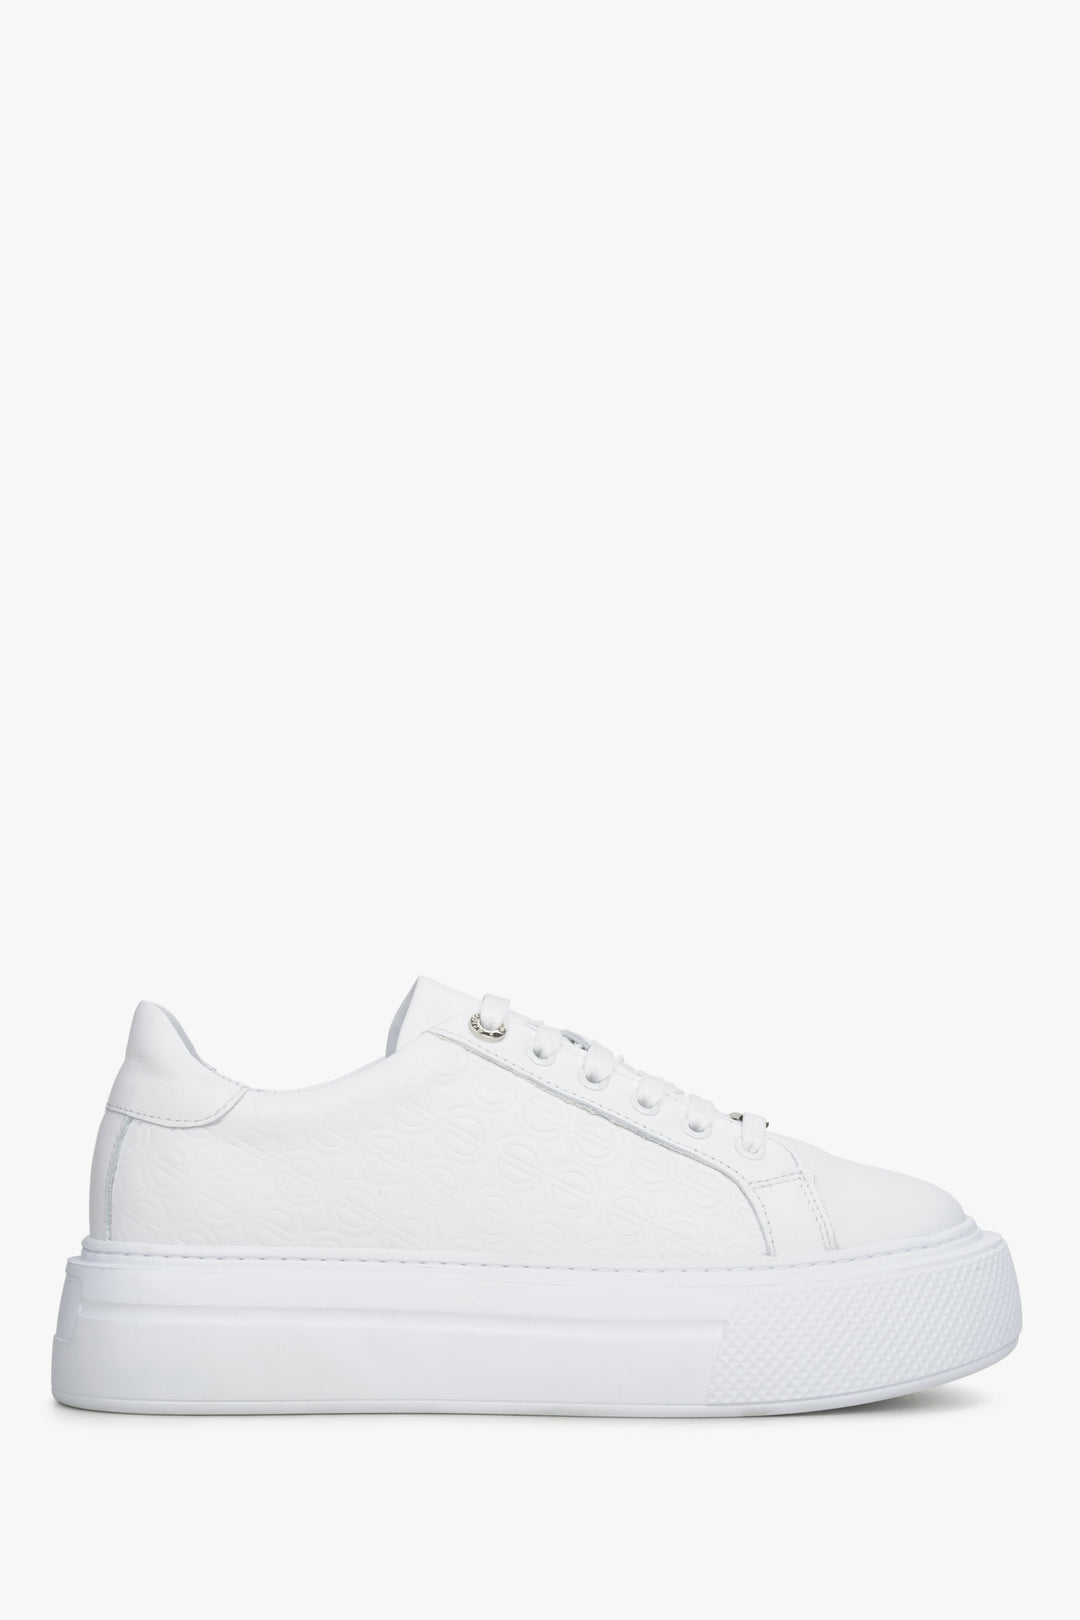 Women's white leather sneakers by Estro - shoe profile.